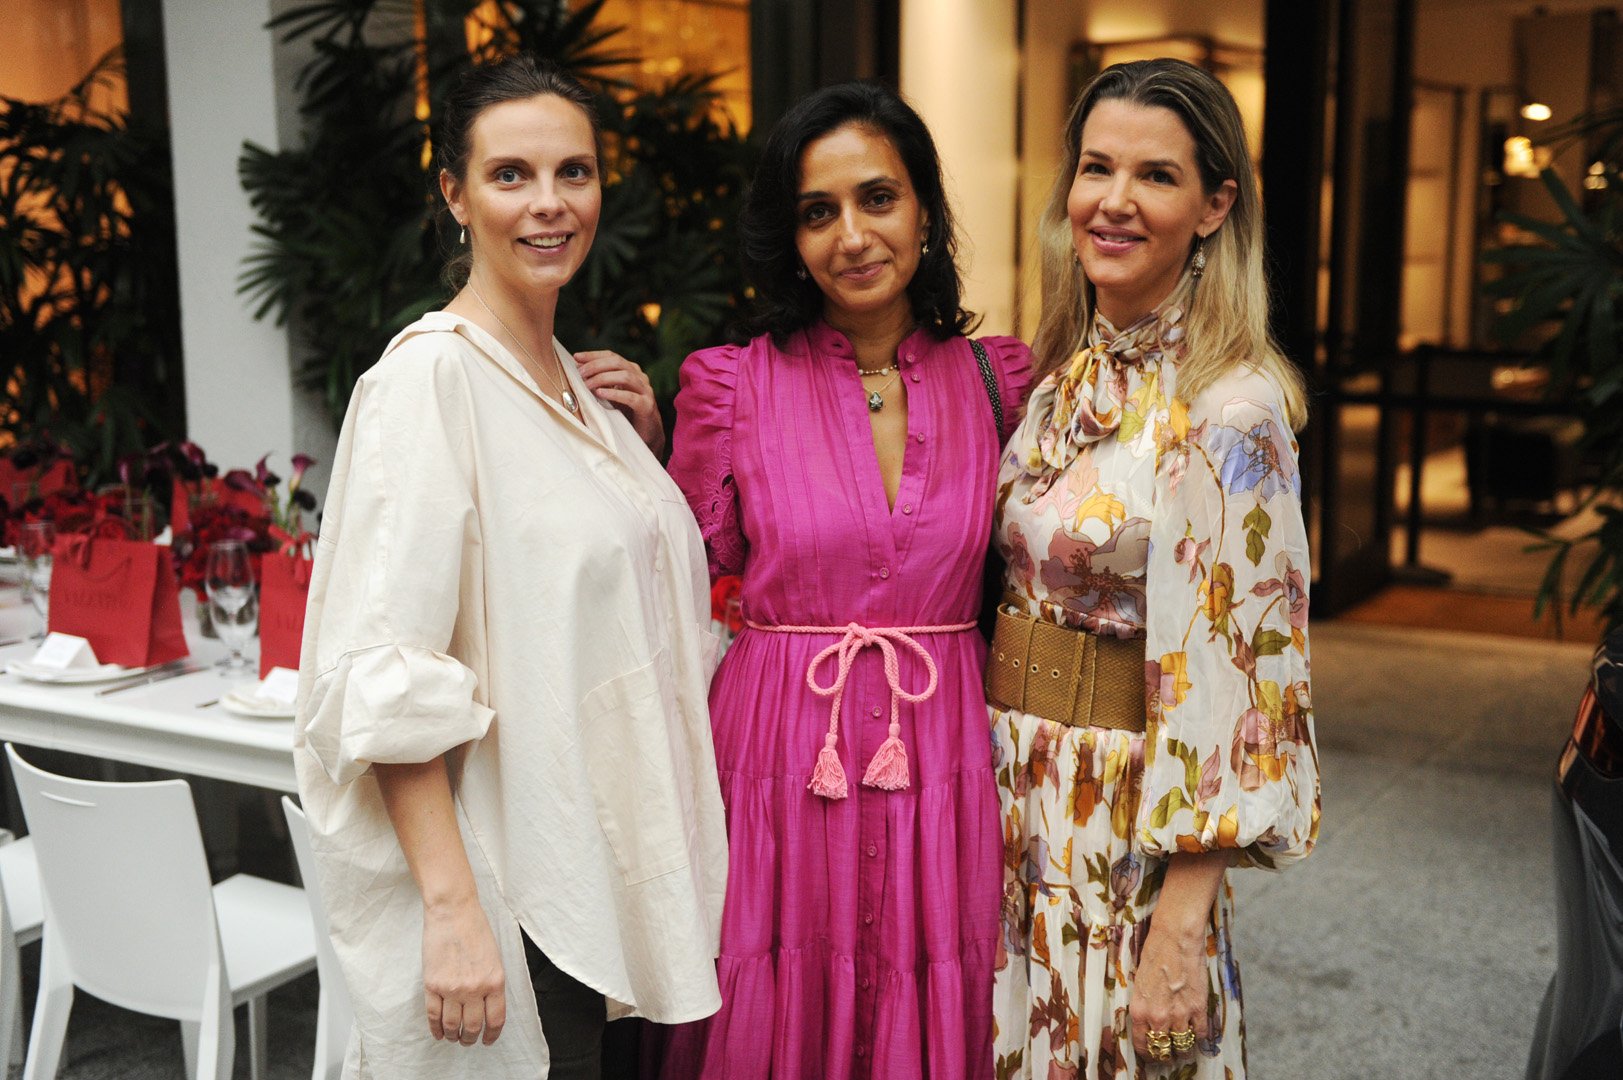 Brianna Lipovsky, Priya Panjabi and Andrea Noboa pose for a photo